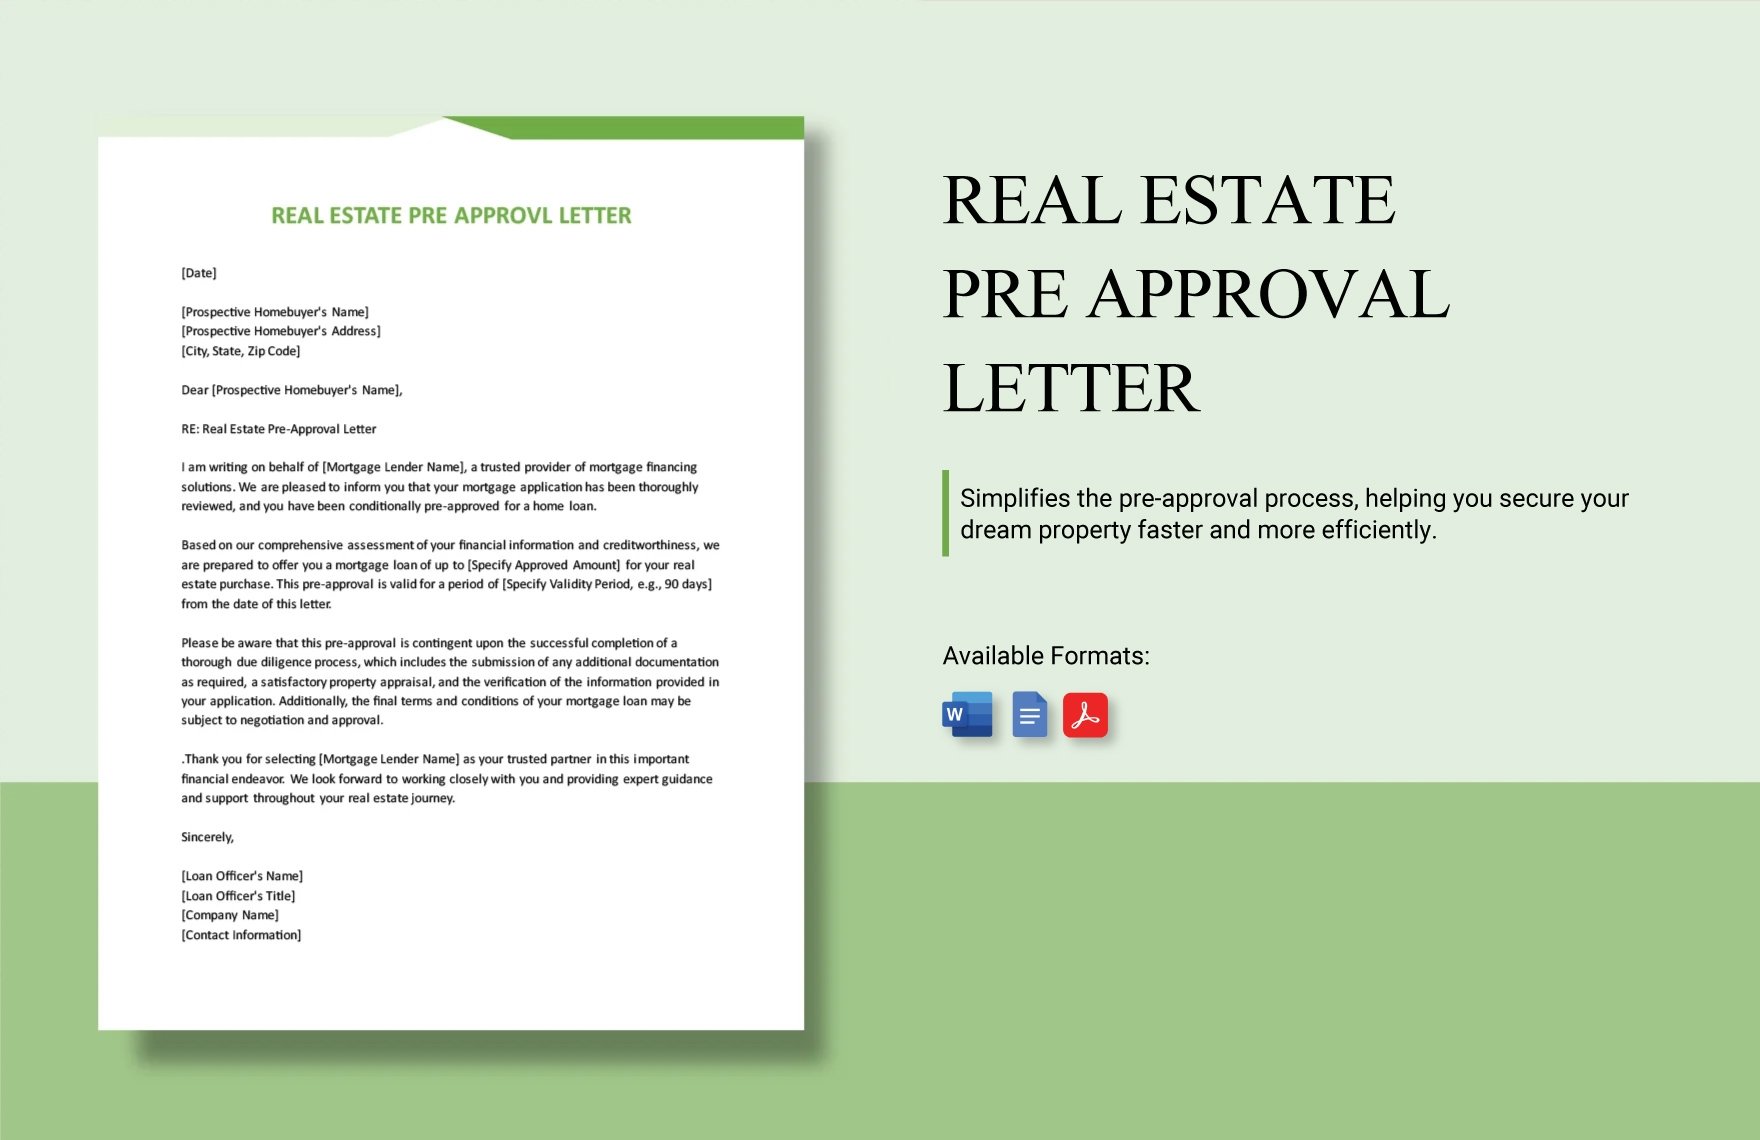 Real Estate Pre Approval Letter in Word, Google Docs, PDF